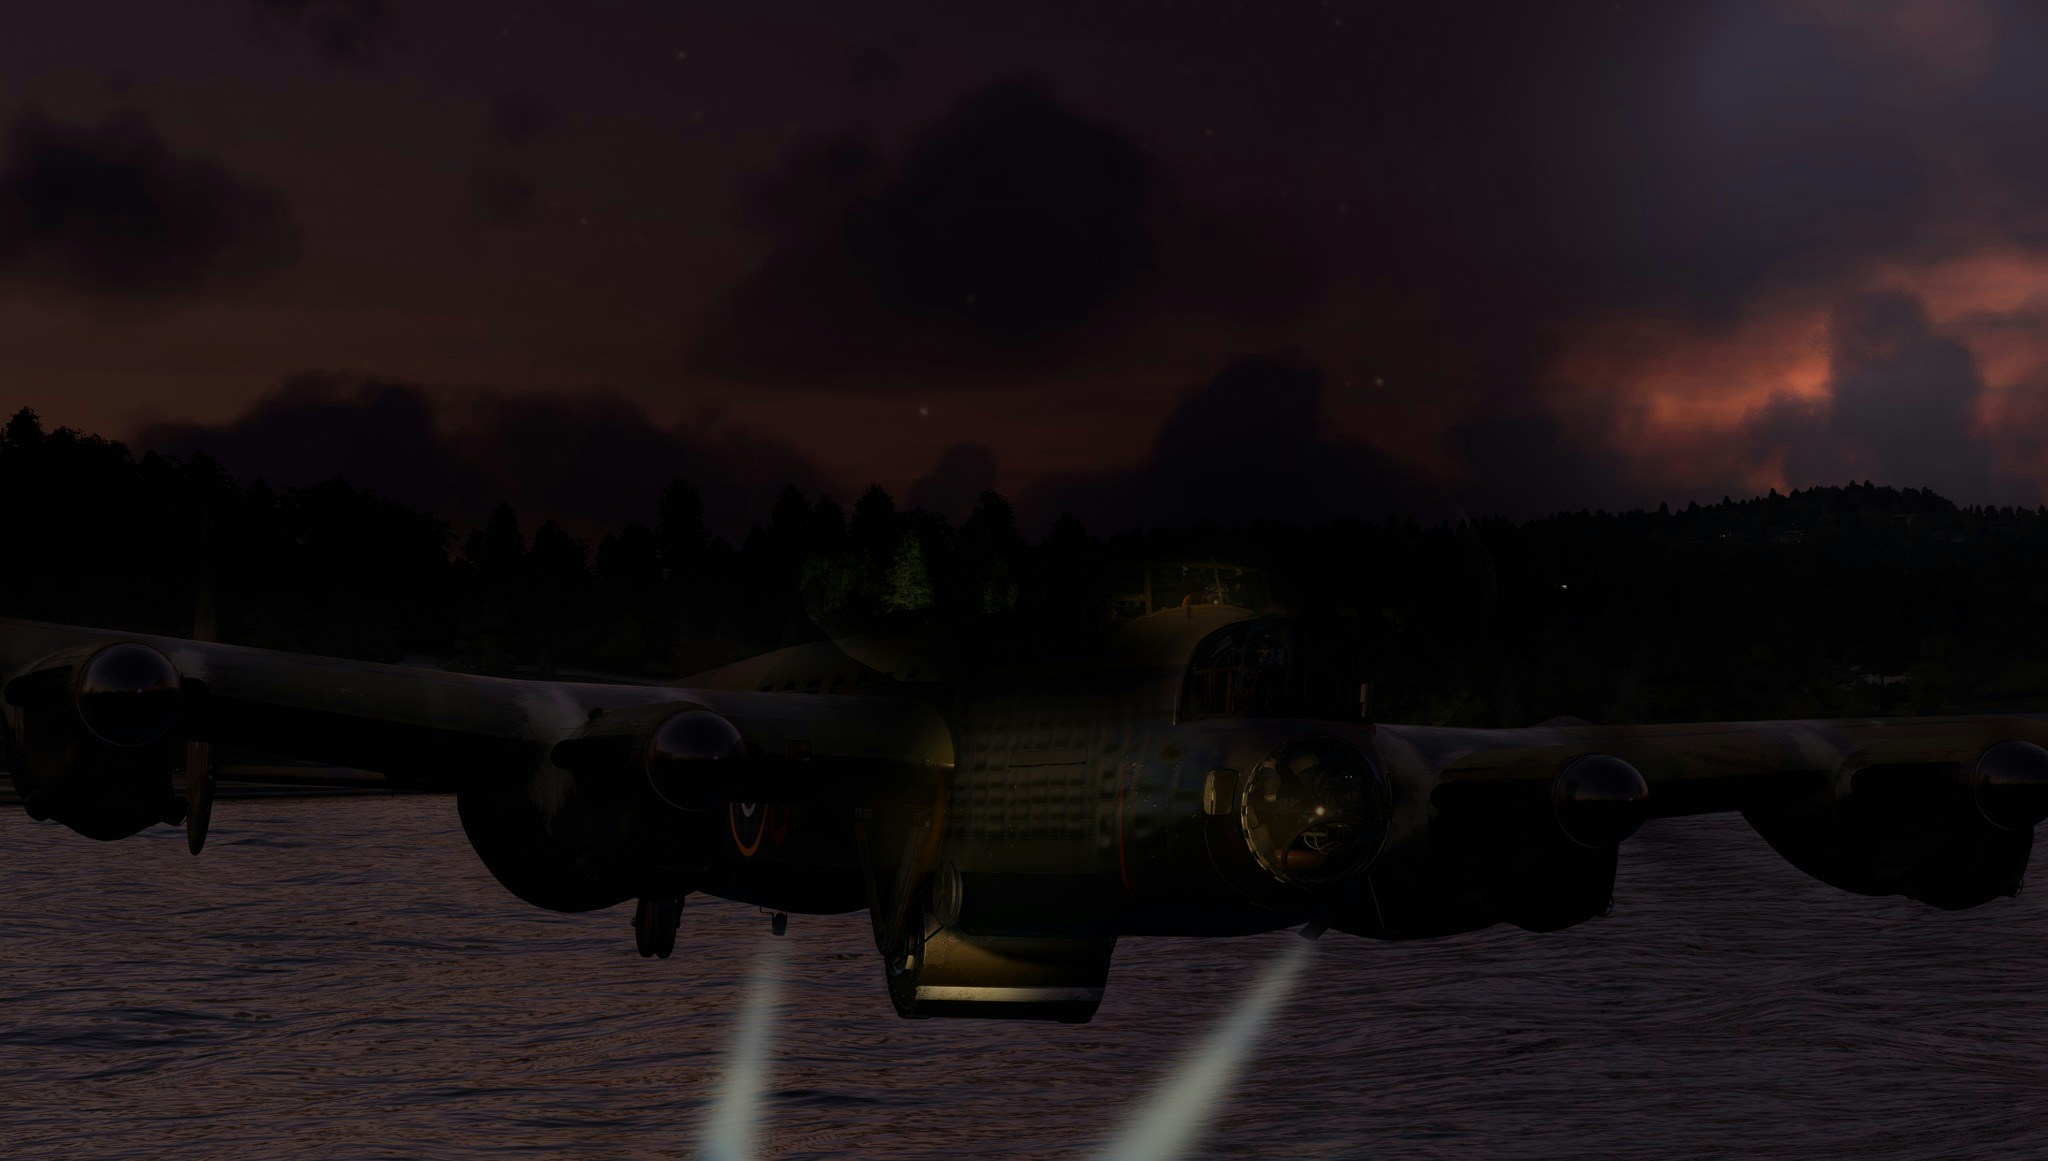 Aeroplane Heaven Announces Spitfire MkVb, Previews Lancaster Dambuster